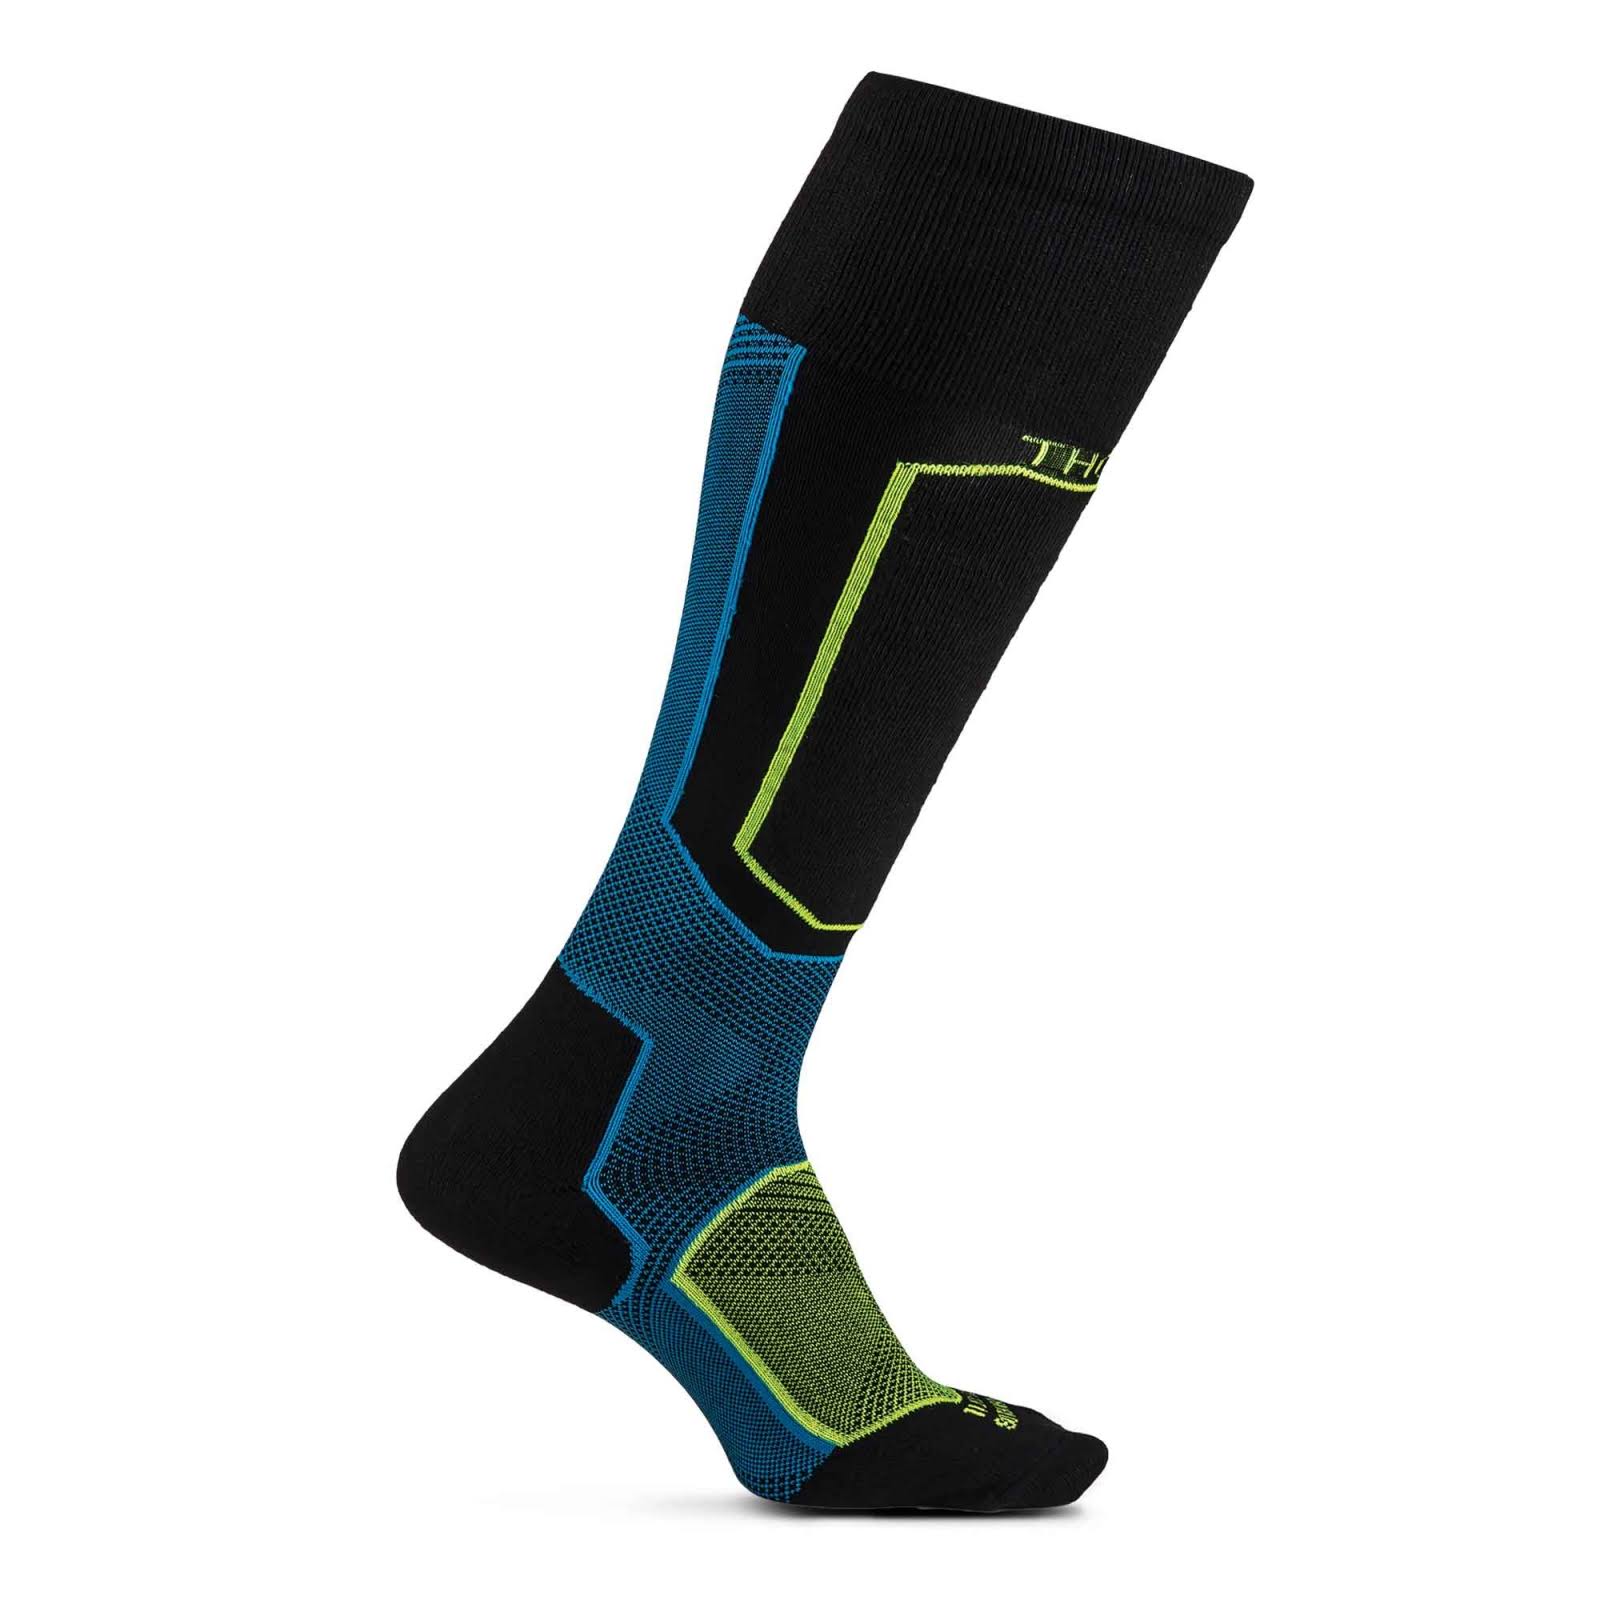 Thorlo Extreme Custom Ski Socks - Green/Blue, Small